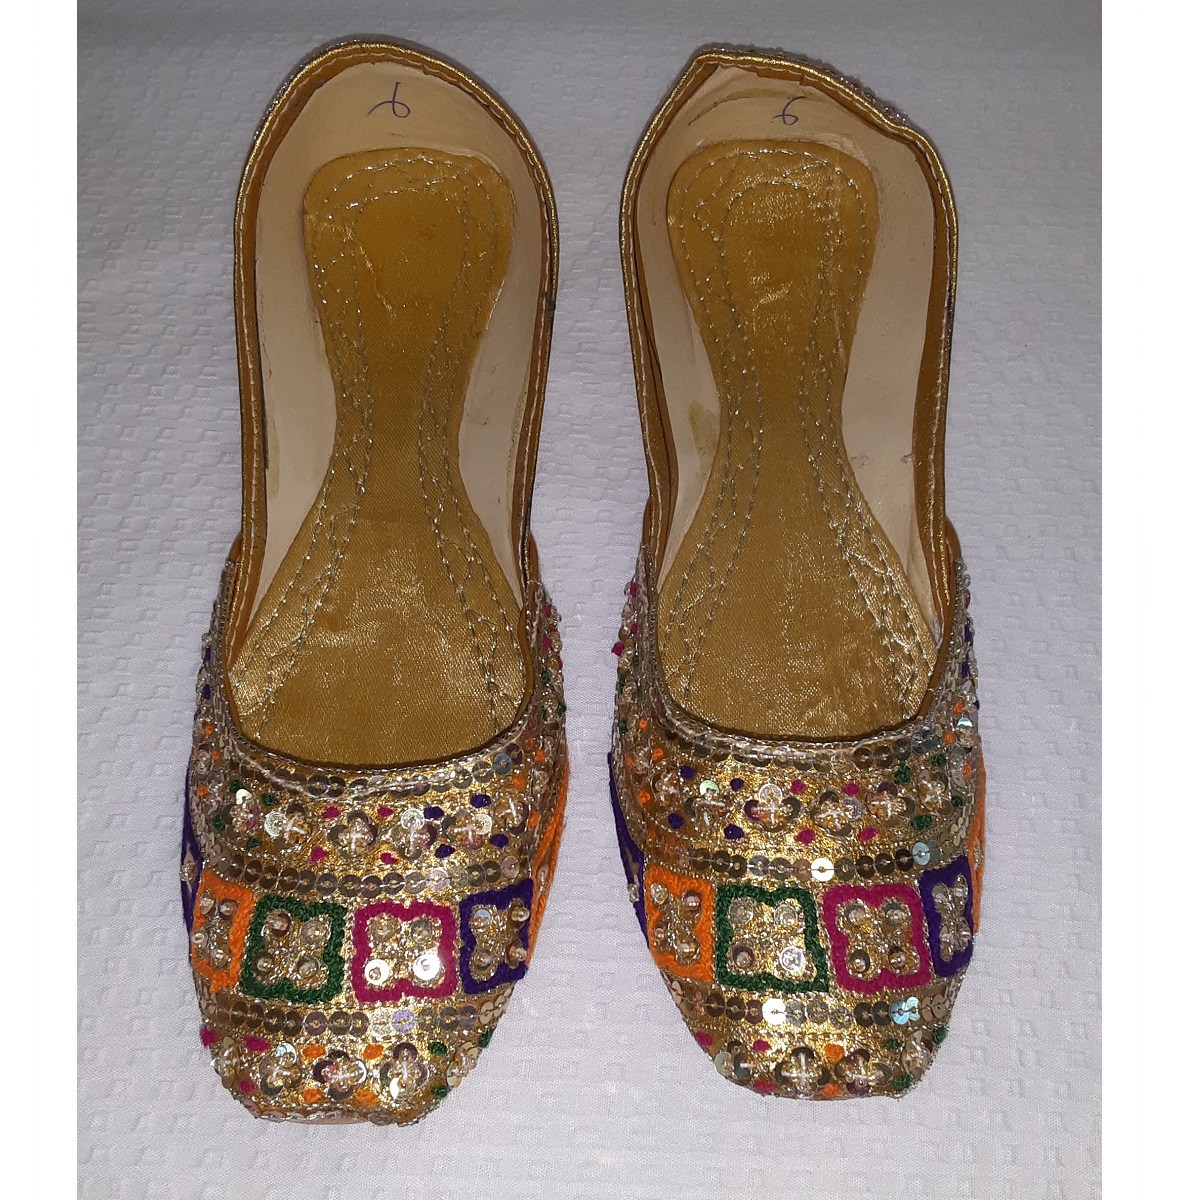 Pakistani Khosas - Handmade Embroidered Shoes for Women